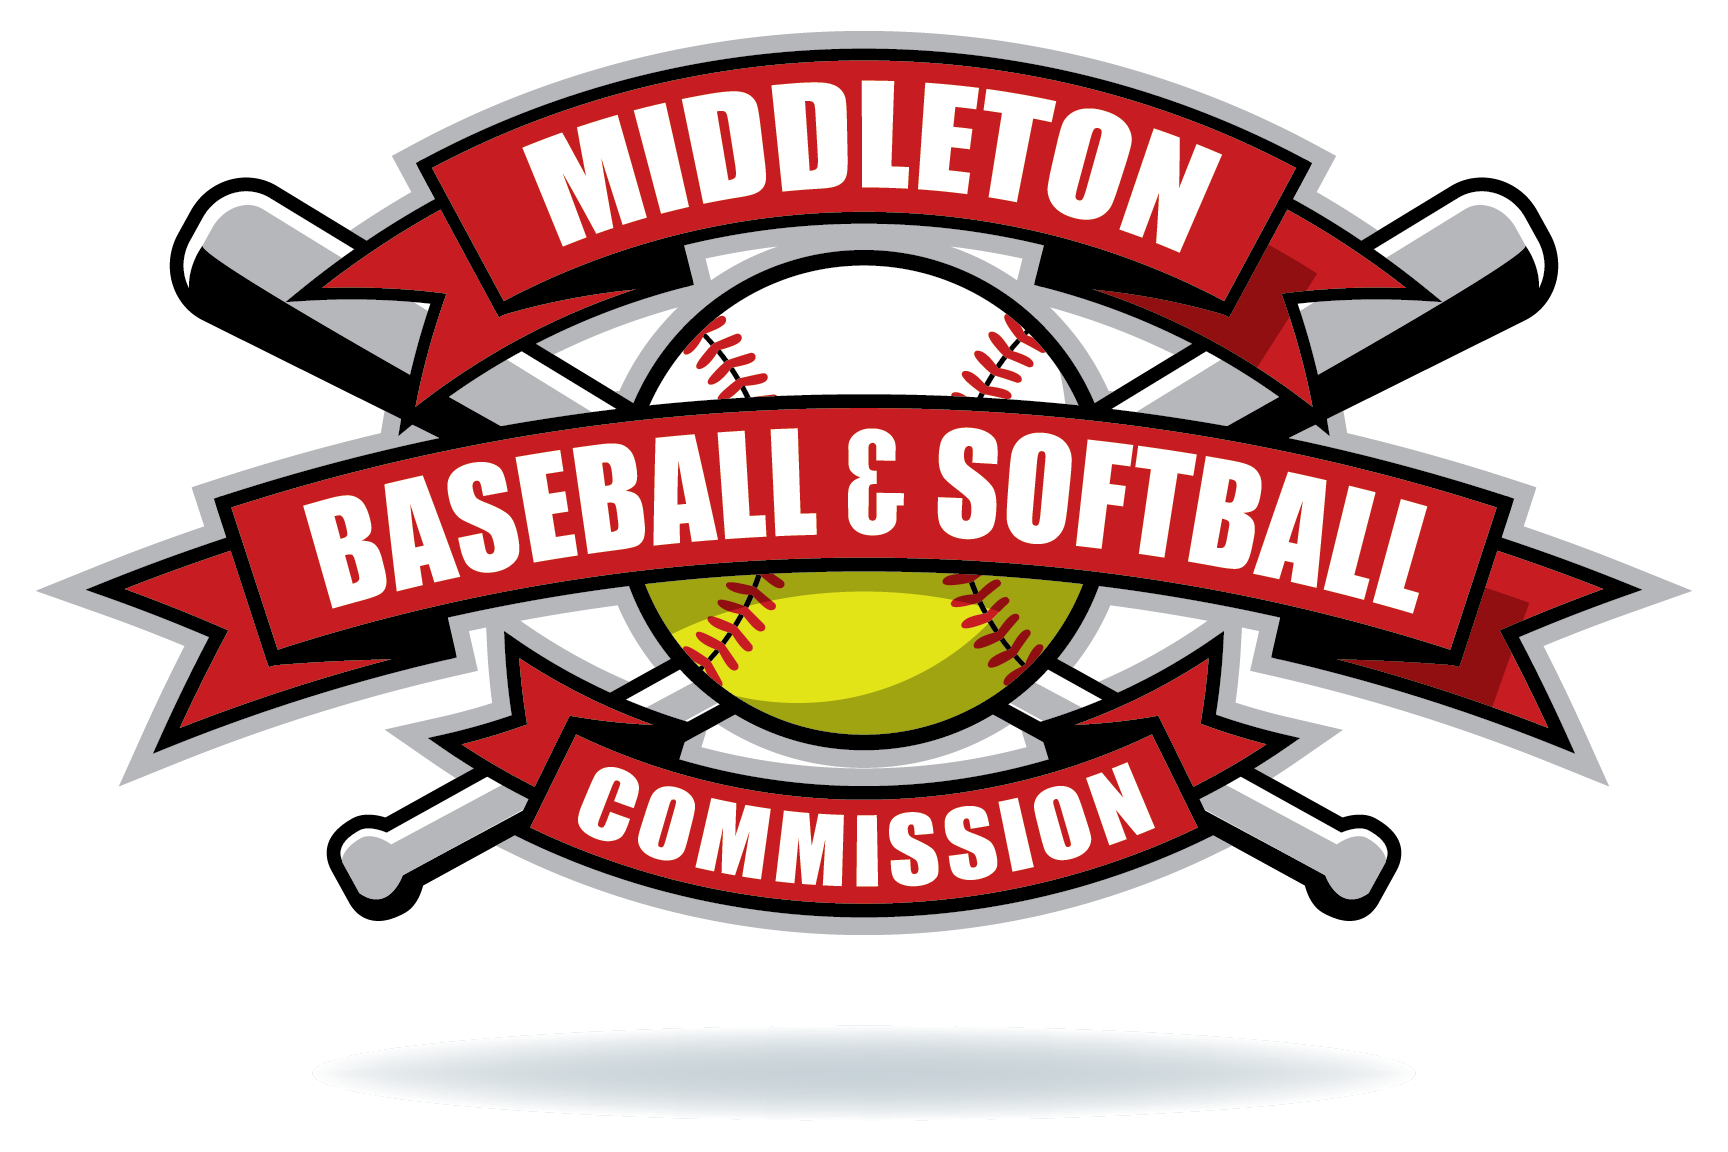 Middleton Baseball and Softball Commission